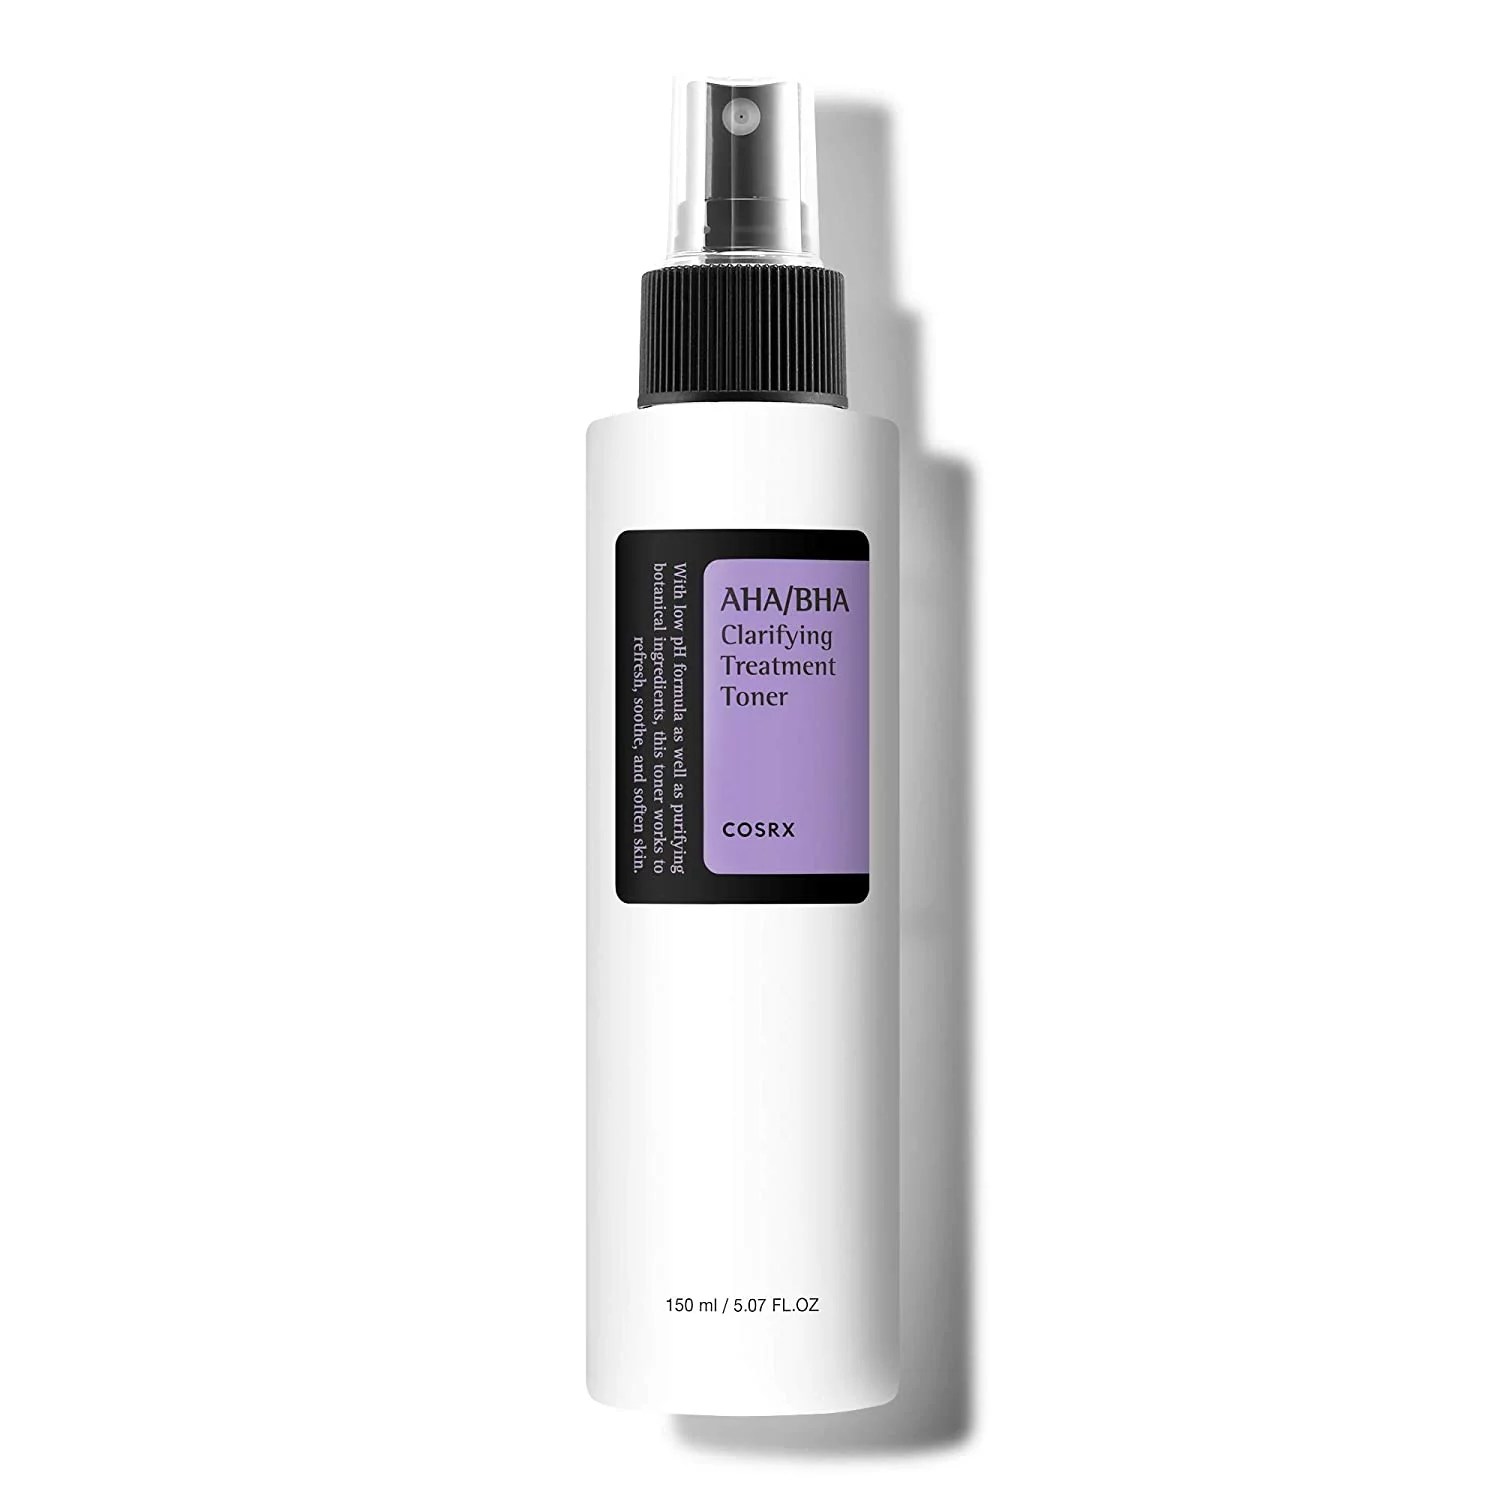 a bottle of cosrx aha and bha spray exfoliator for sensitive skin